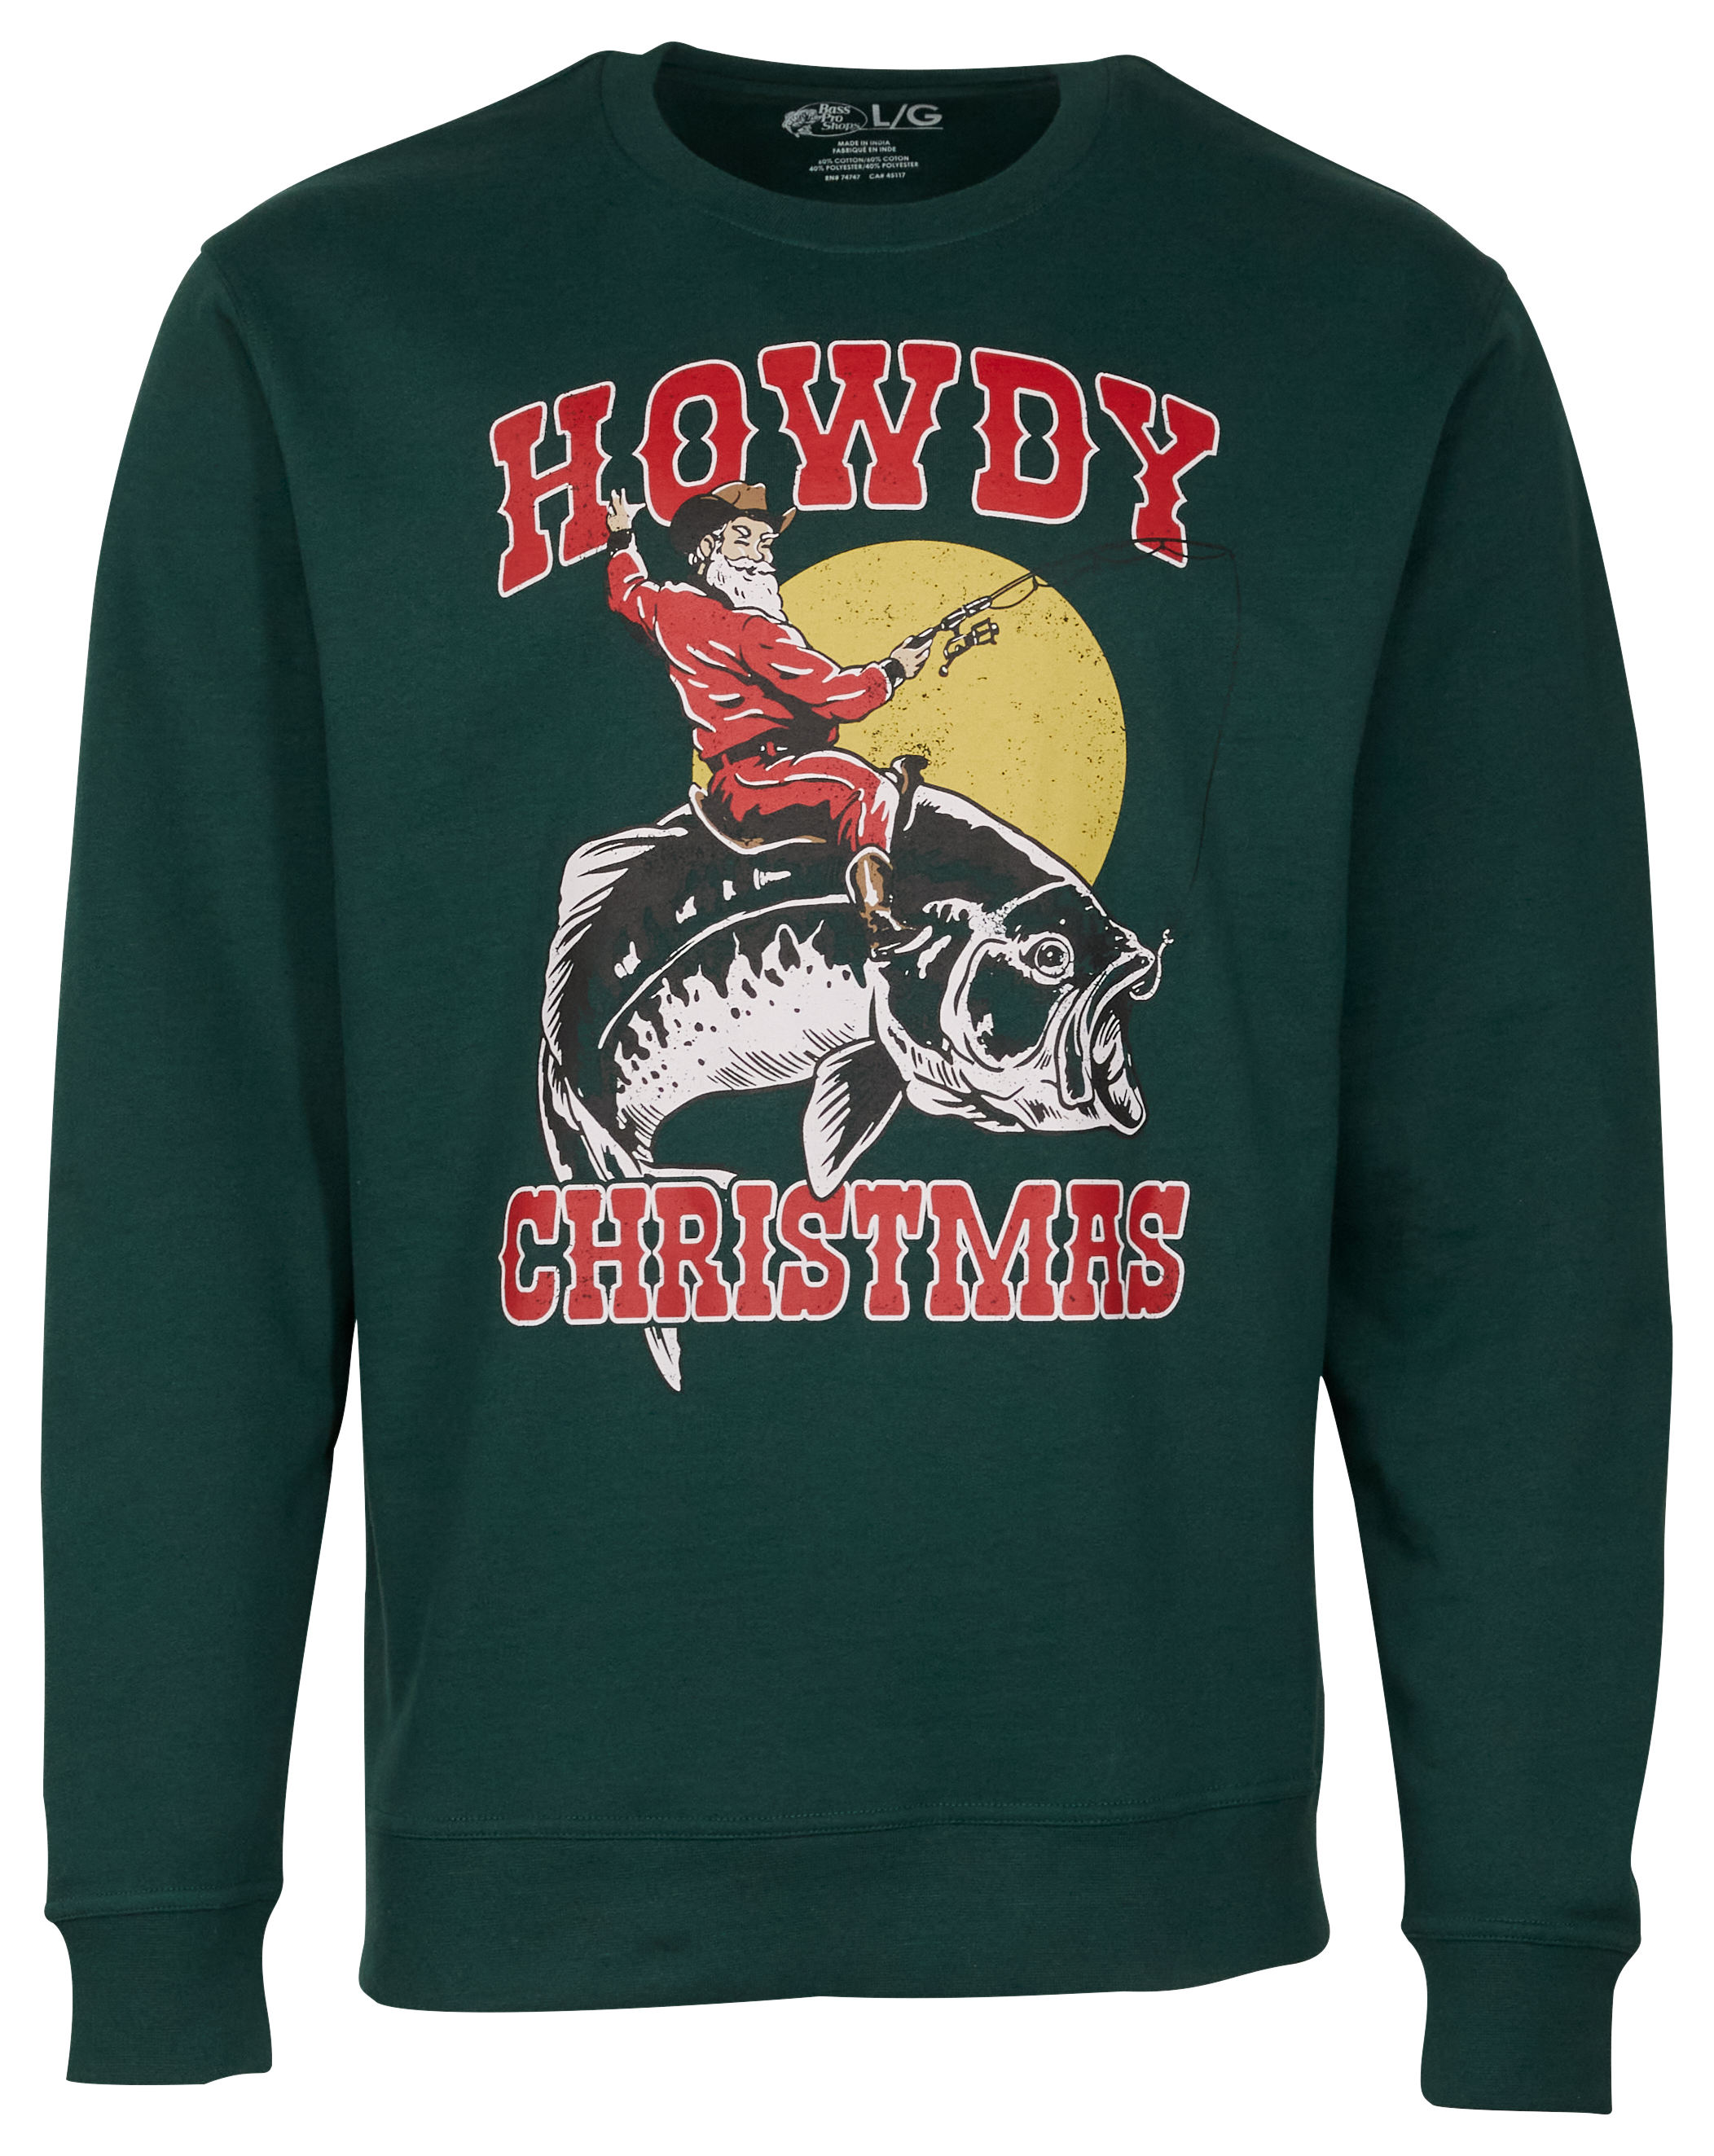 Bass Pro Shops Howdy Hunter Christmas Sweatshirt for Adults